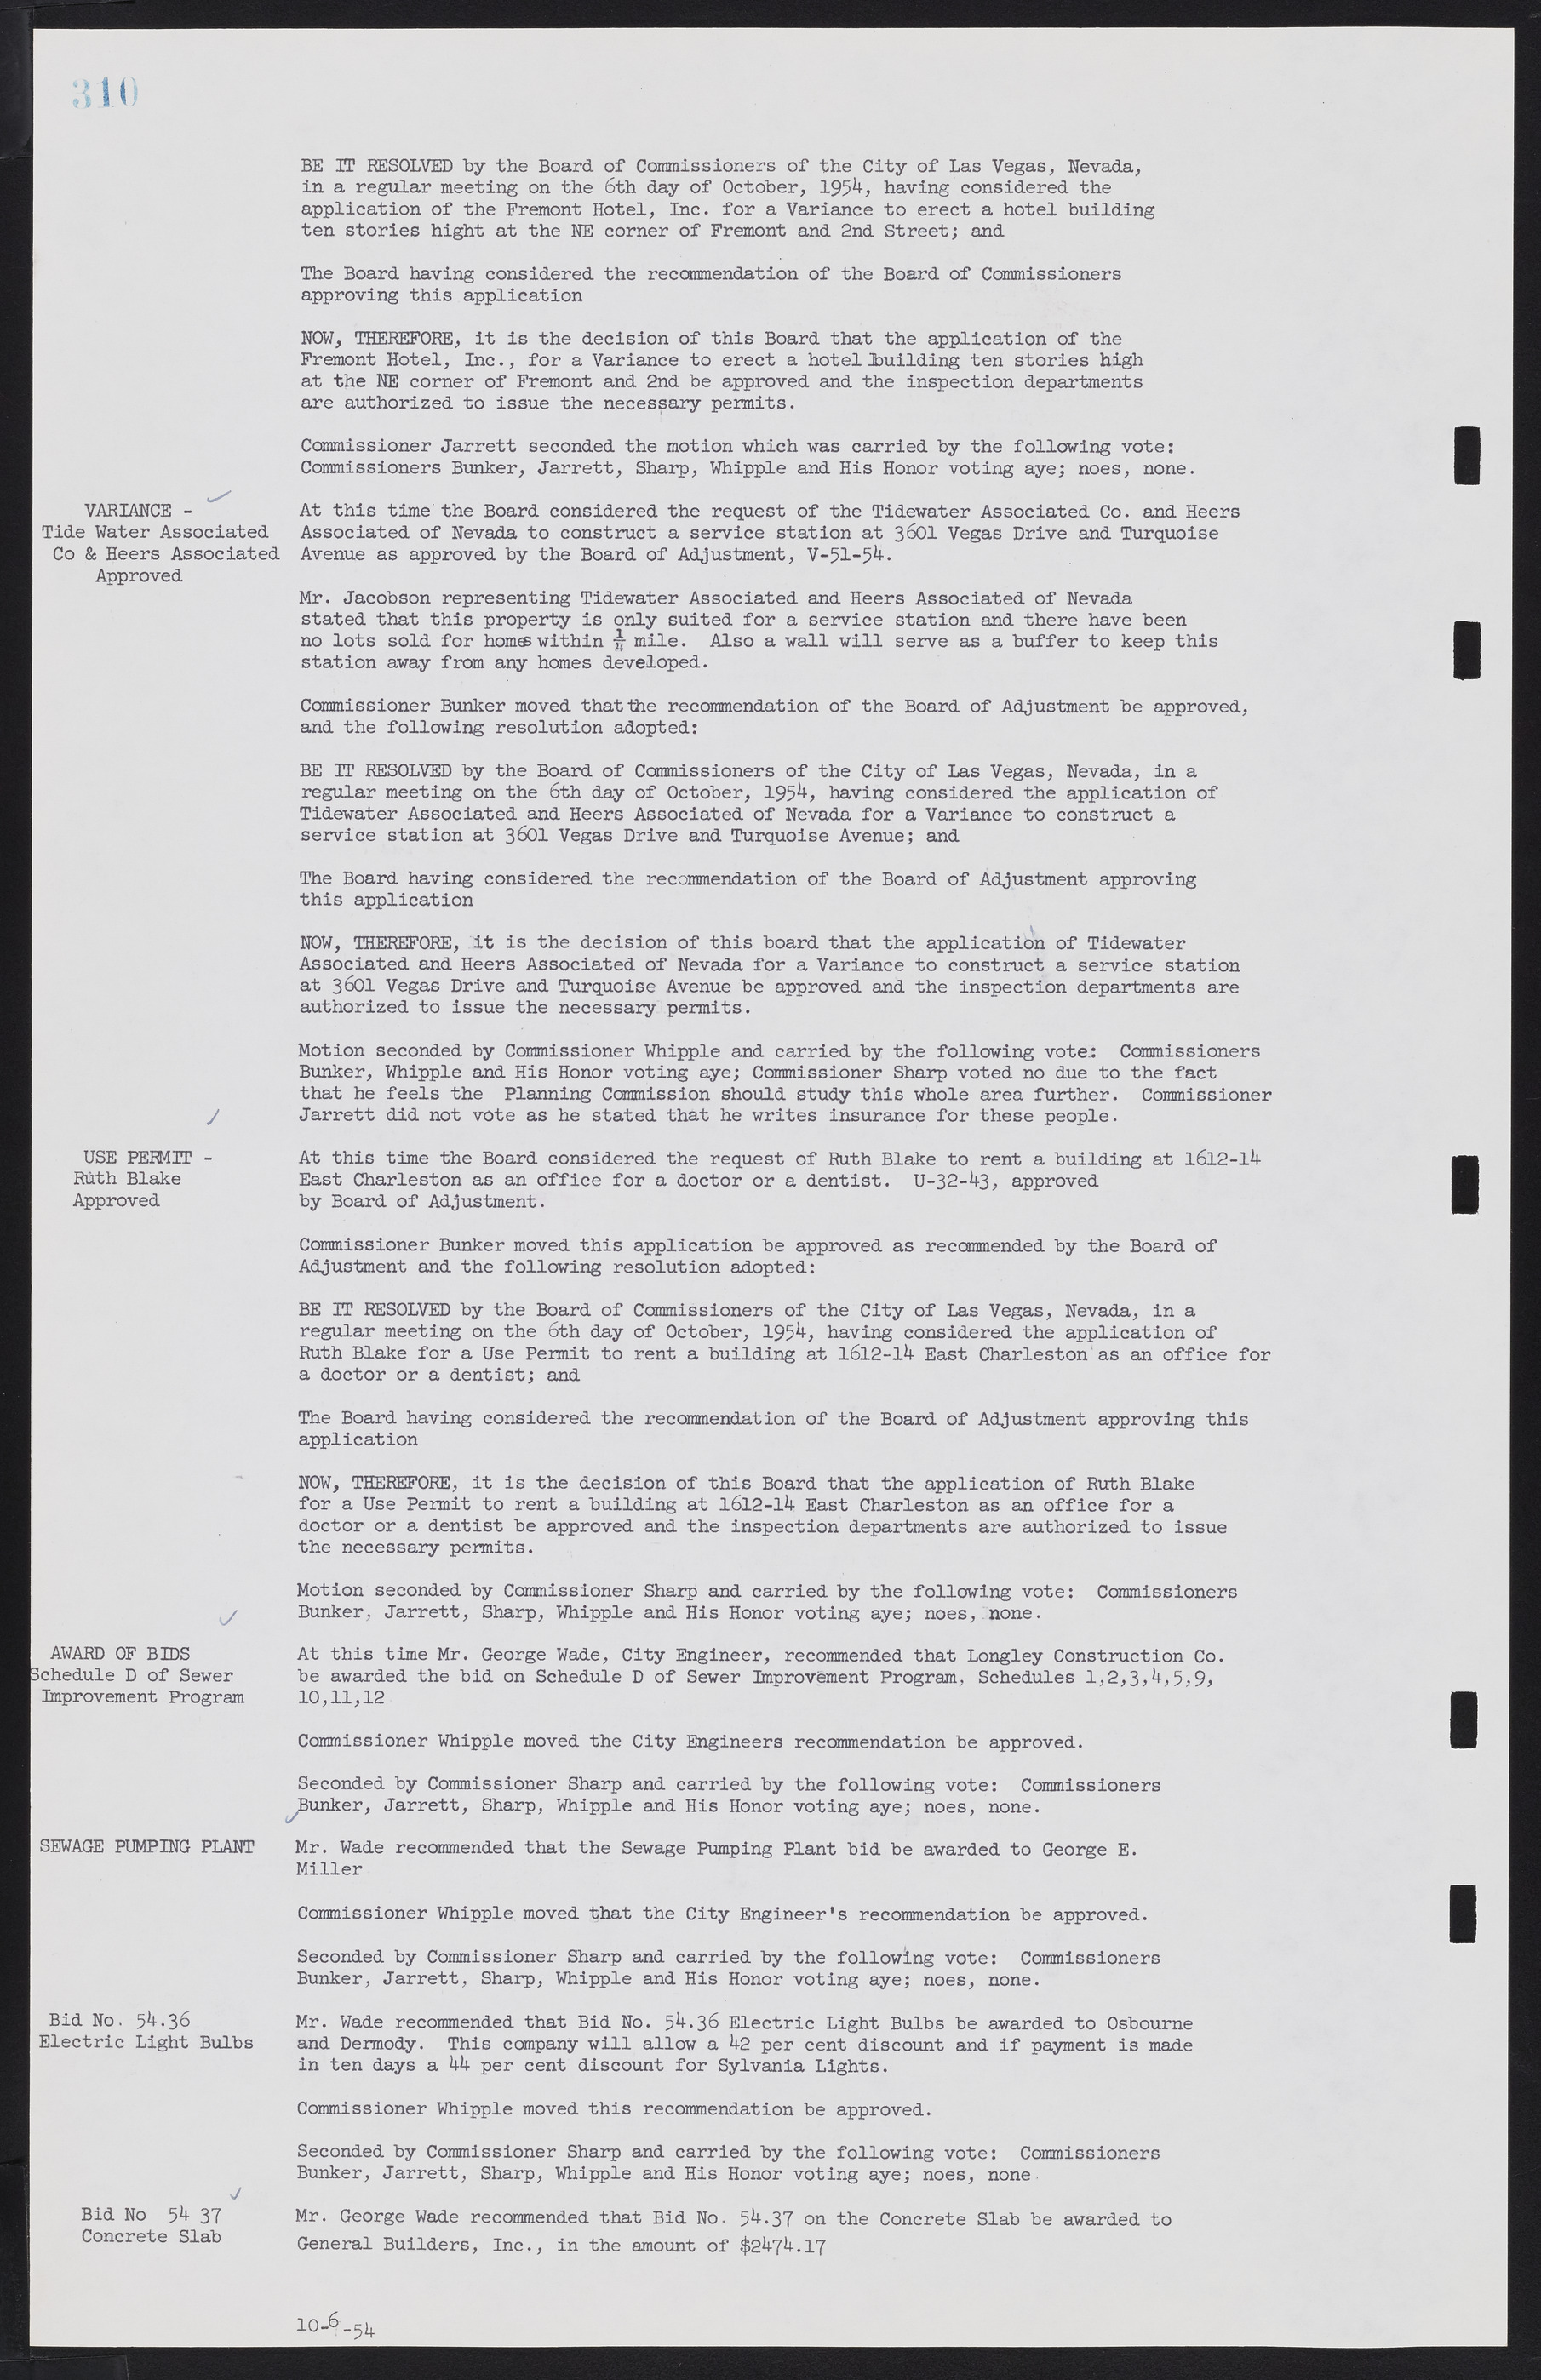 Las Vegas City Commission Minutes, February 17, 1954 to September 21, 1955, lvc000009-316